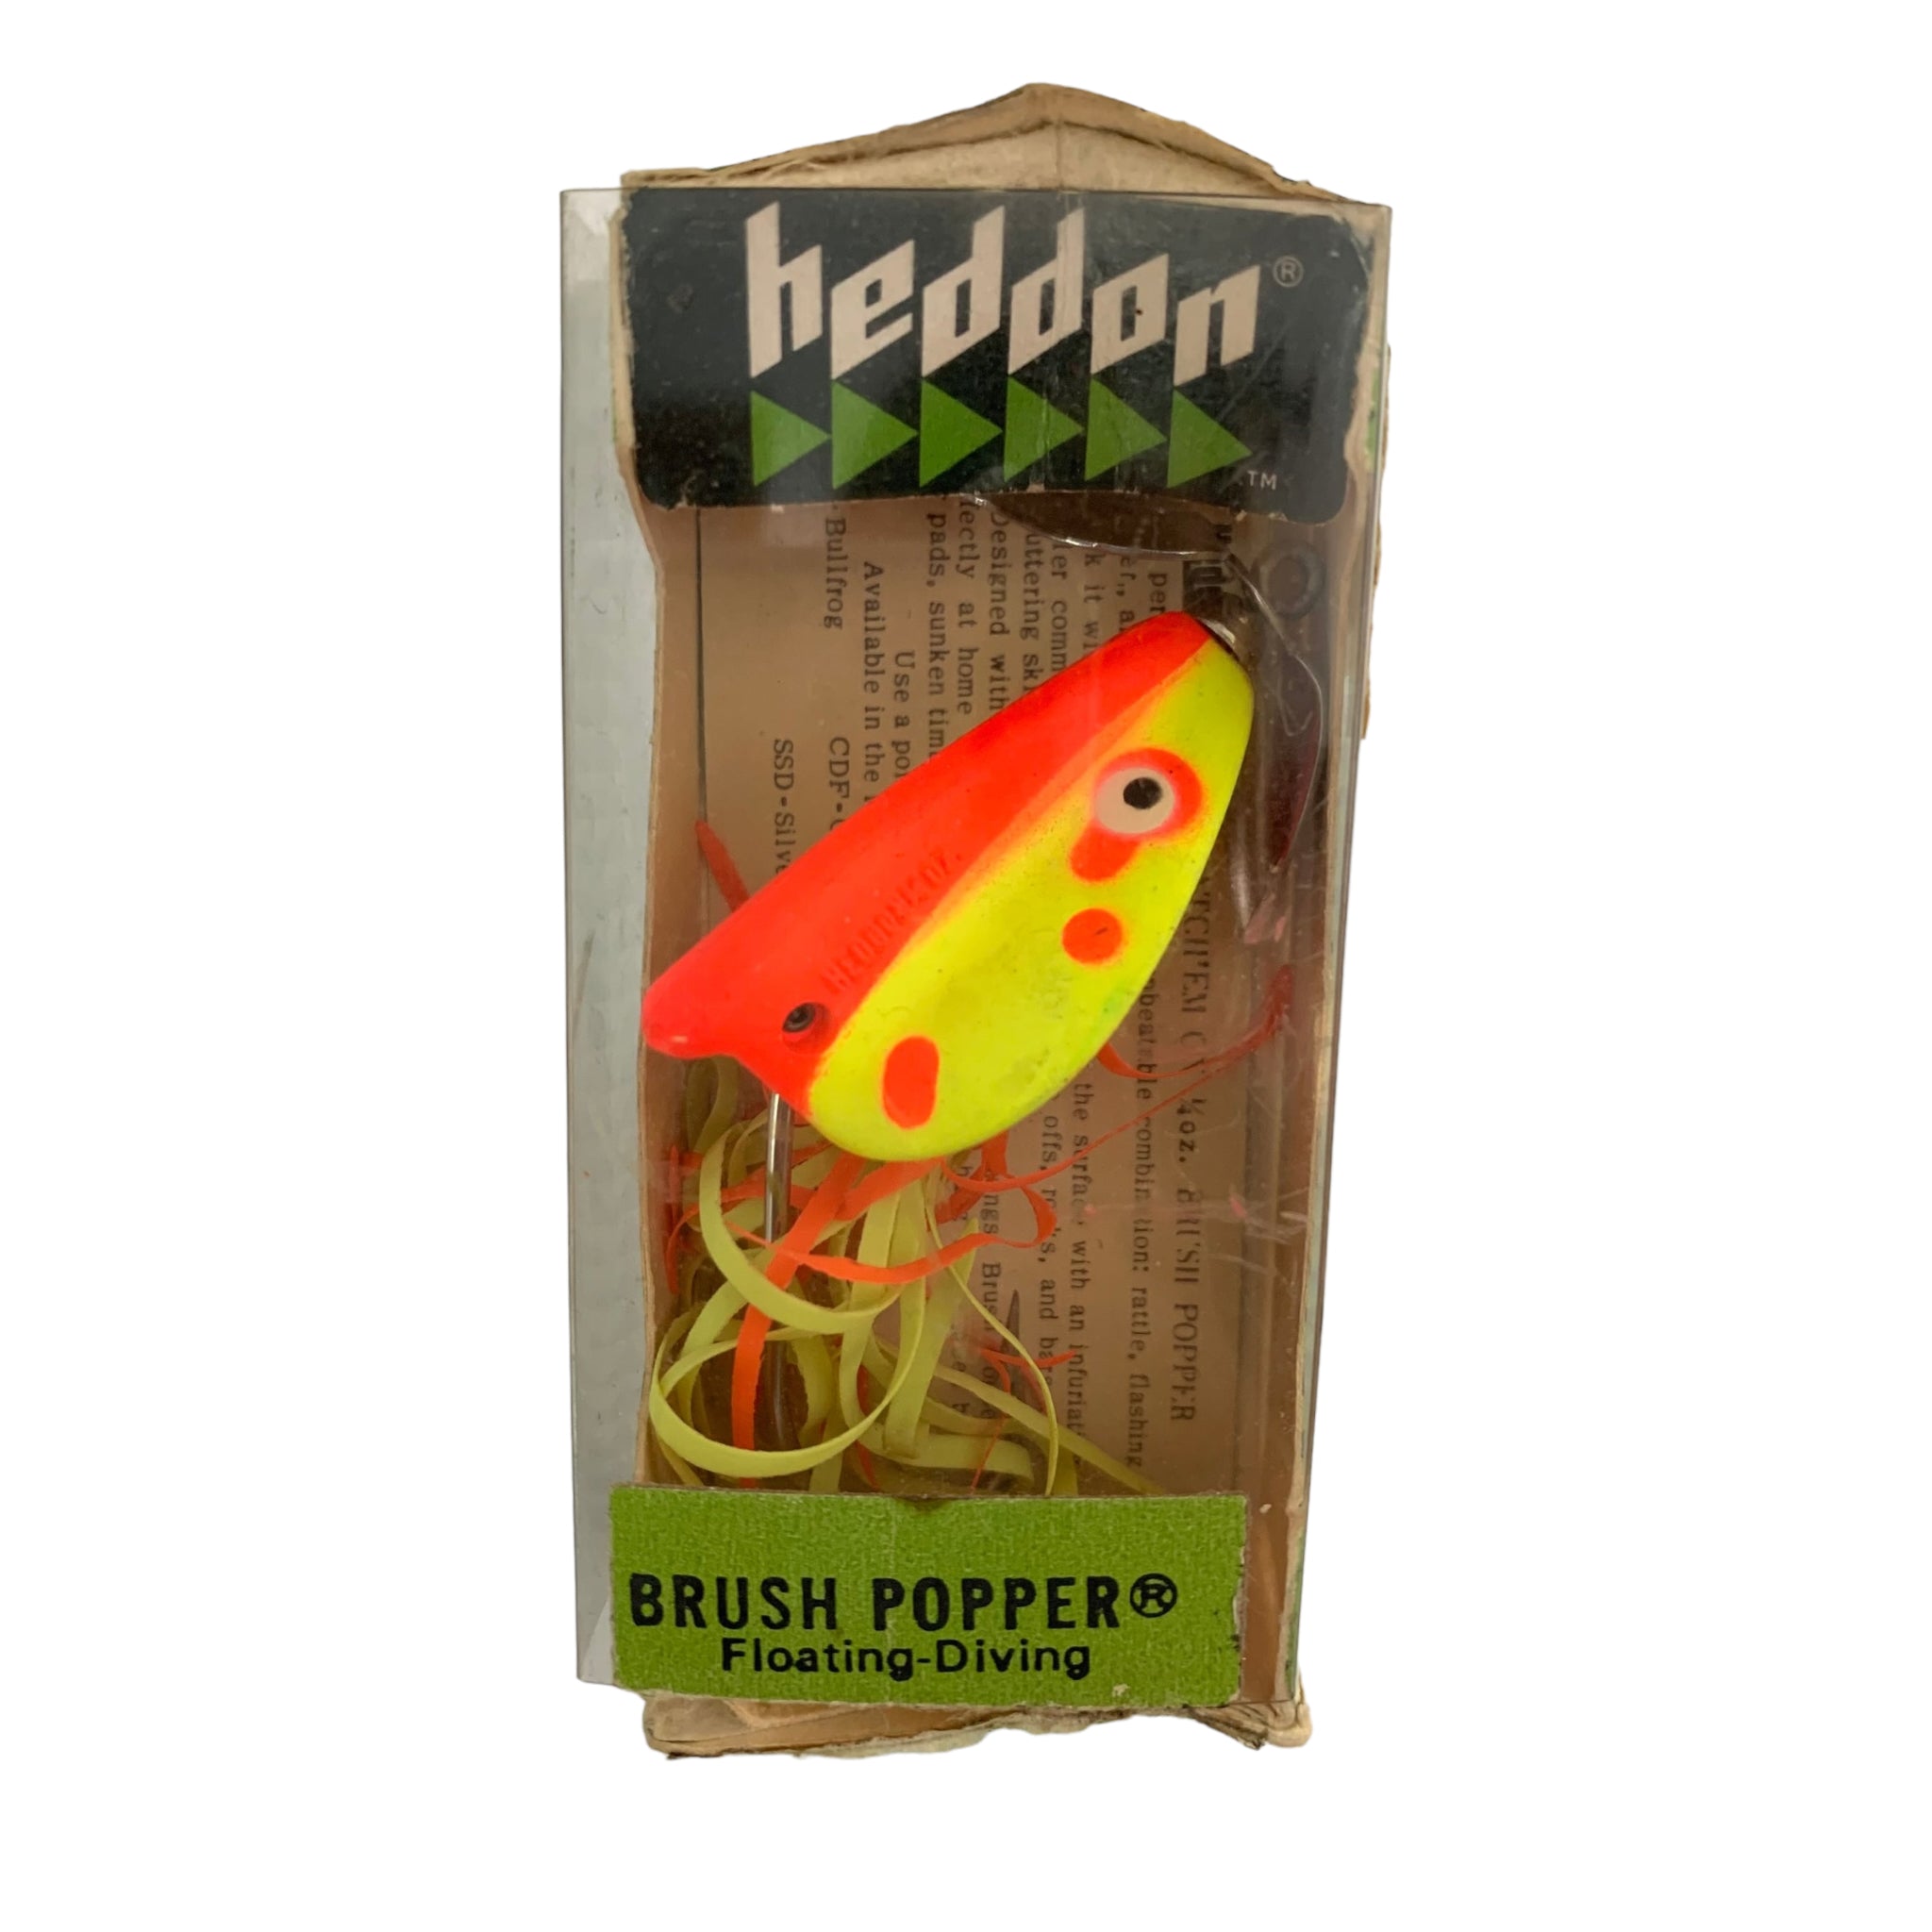 HEDDON 1/4 oz BRUSH POPPER Fishing Lure • 5430 RFY YELLOW & RED